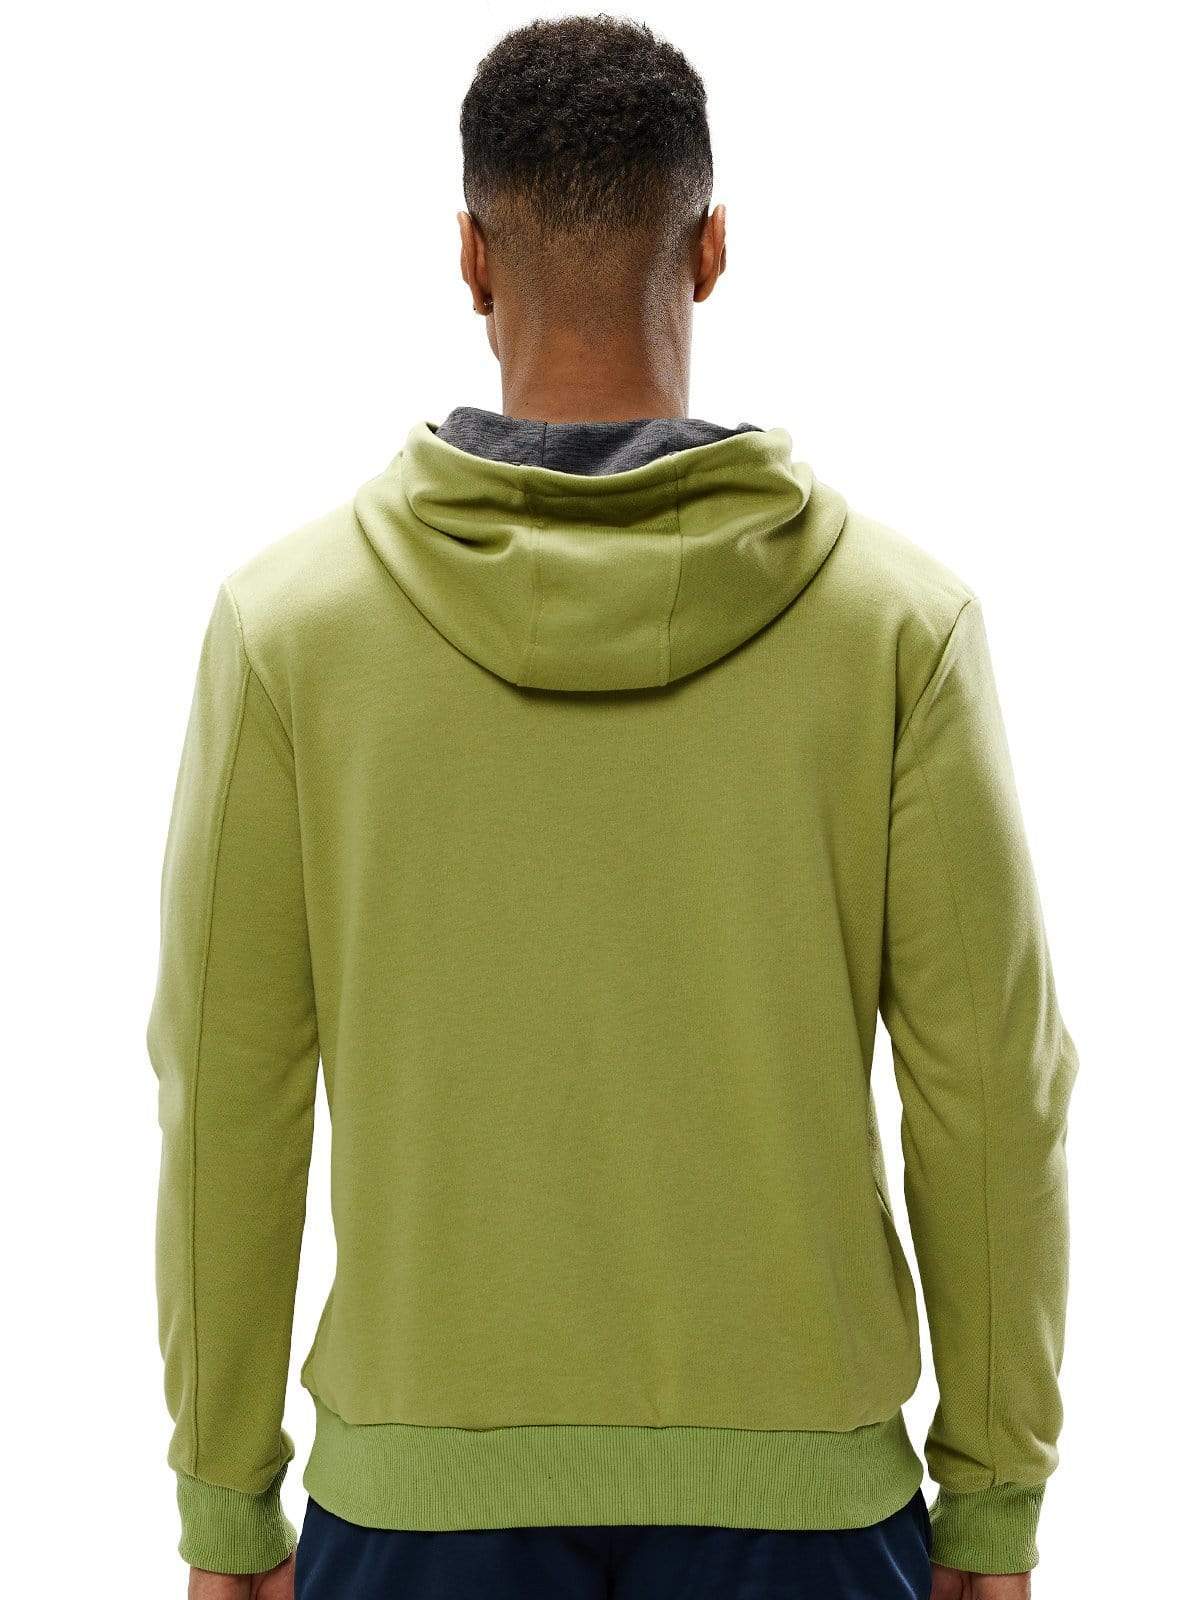 MIER Men's Hooded Sweatshirt Terry Fleece Hoodie Pullover MIERSPORTS